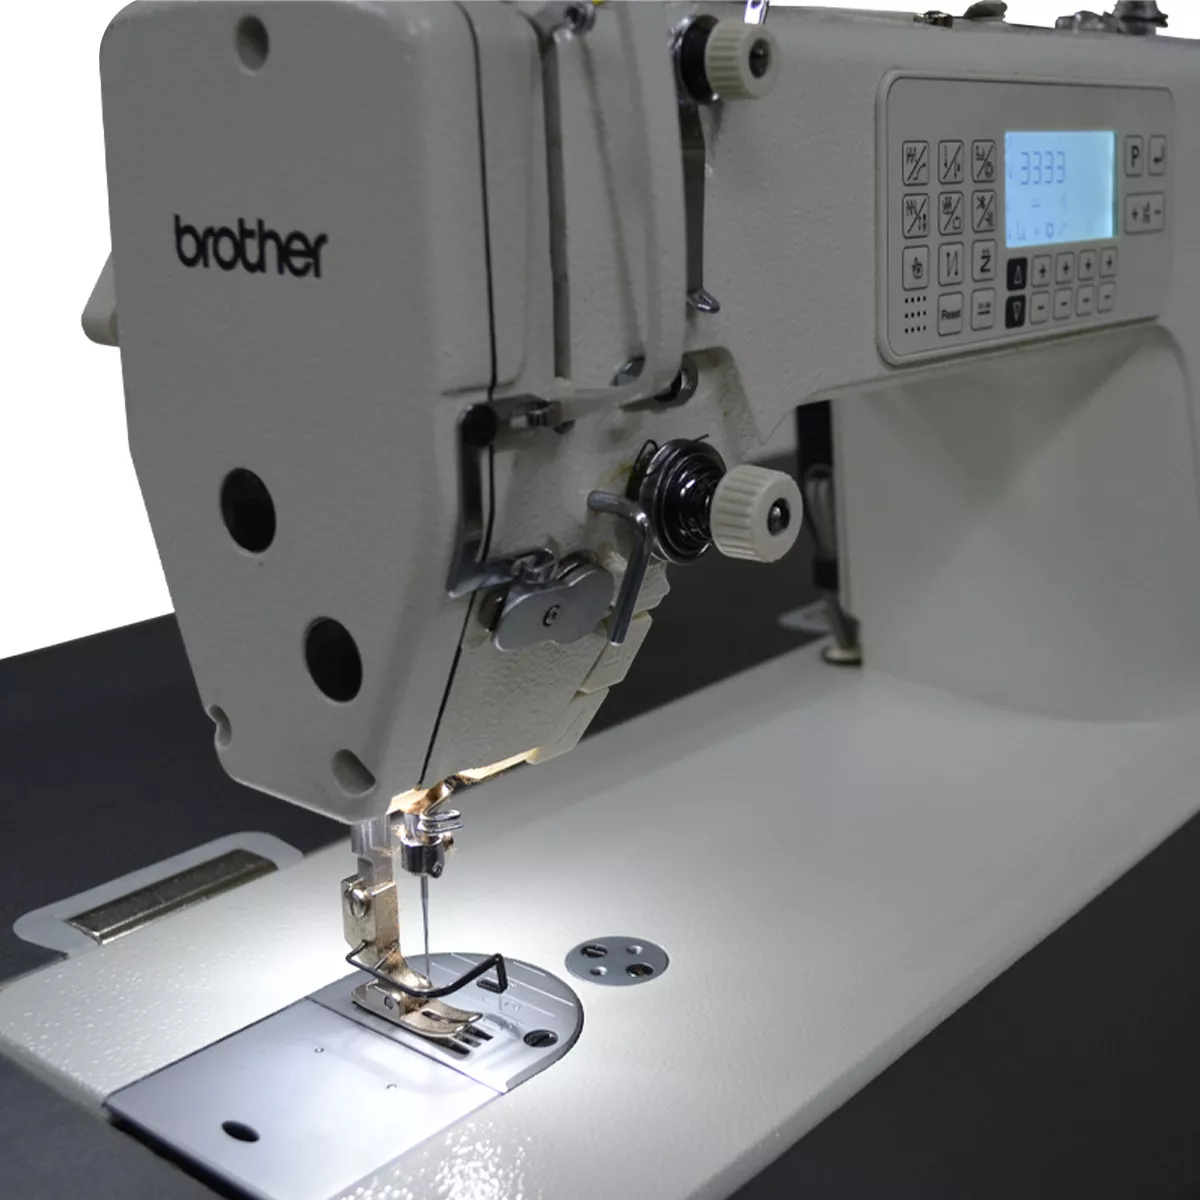 Primera imagen para búsqueda de maquina de coser industrial brother